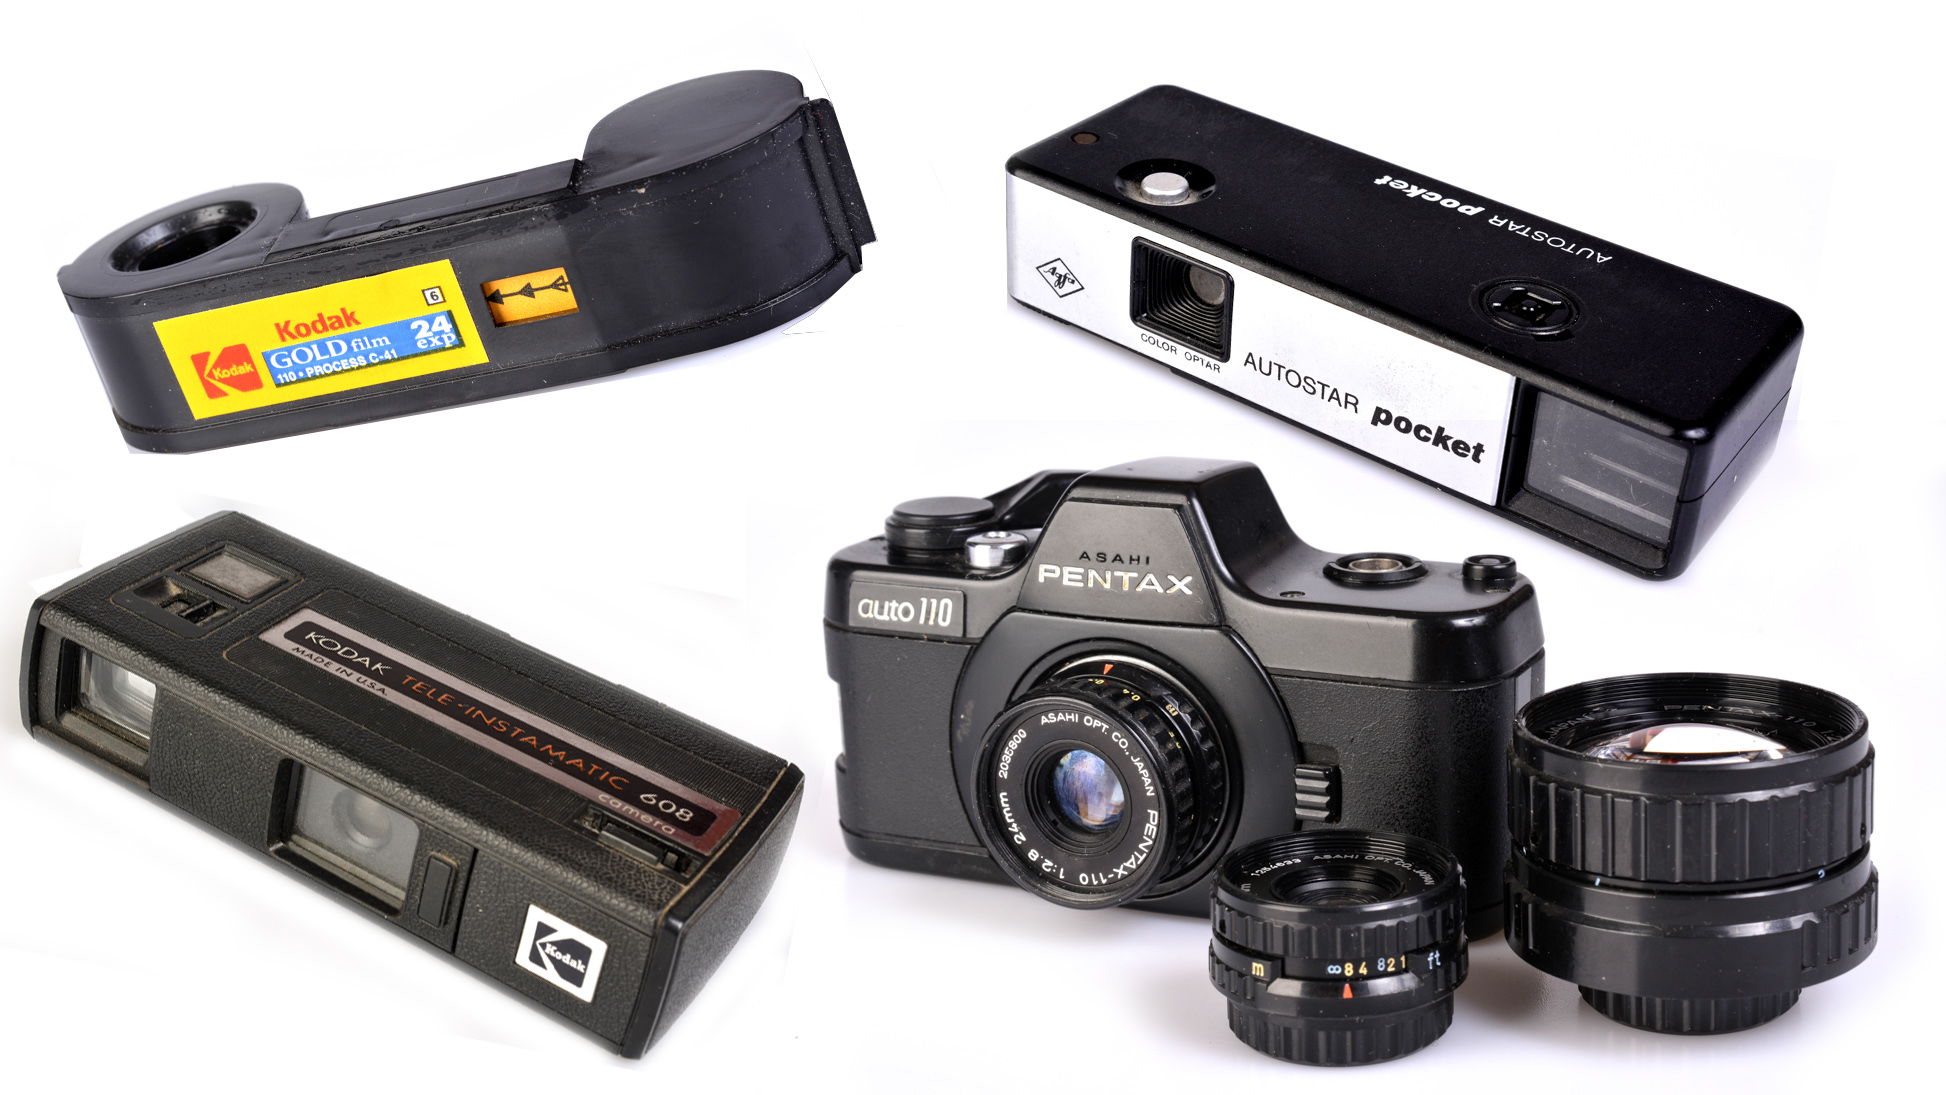 Toptron Microcam Mini Pocket Camera Optical Lens TC-505 Series f:11 Mini  Size